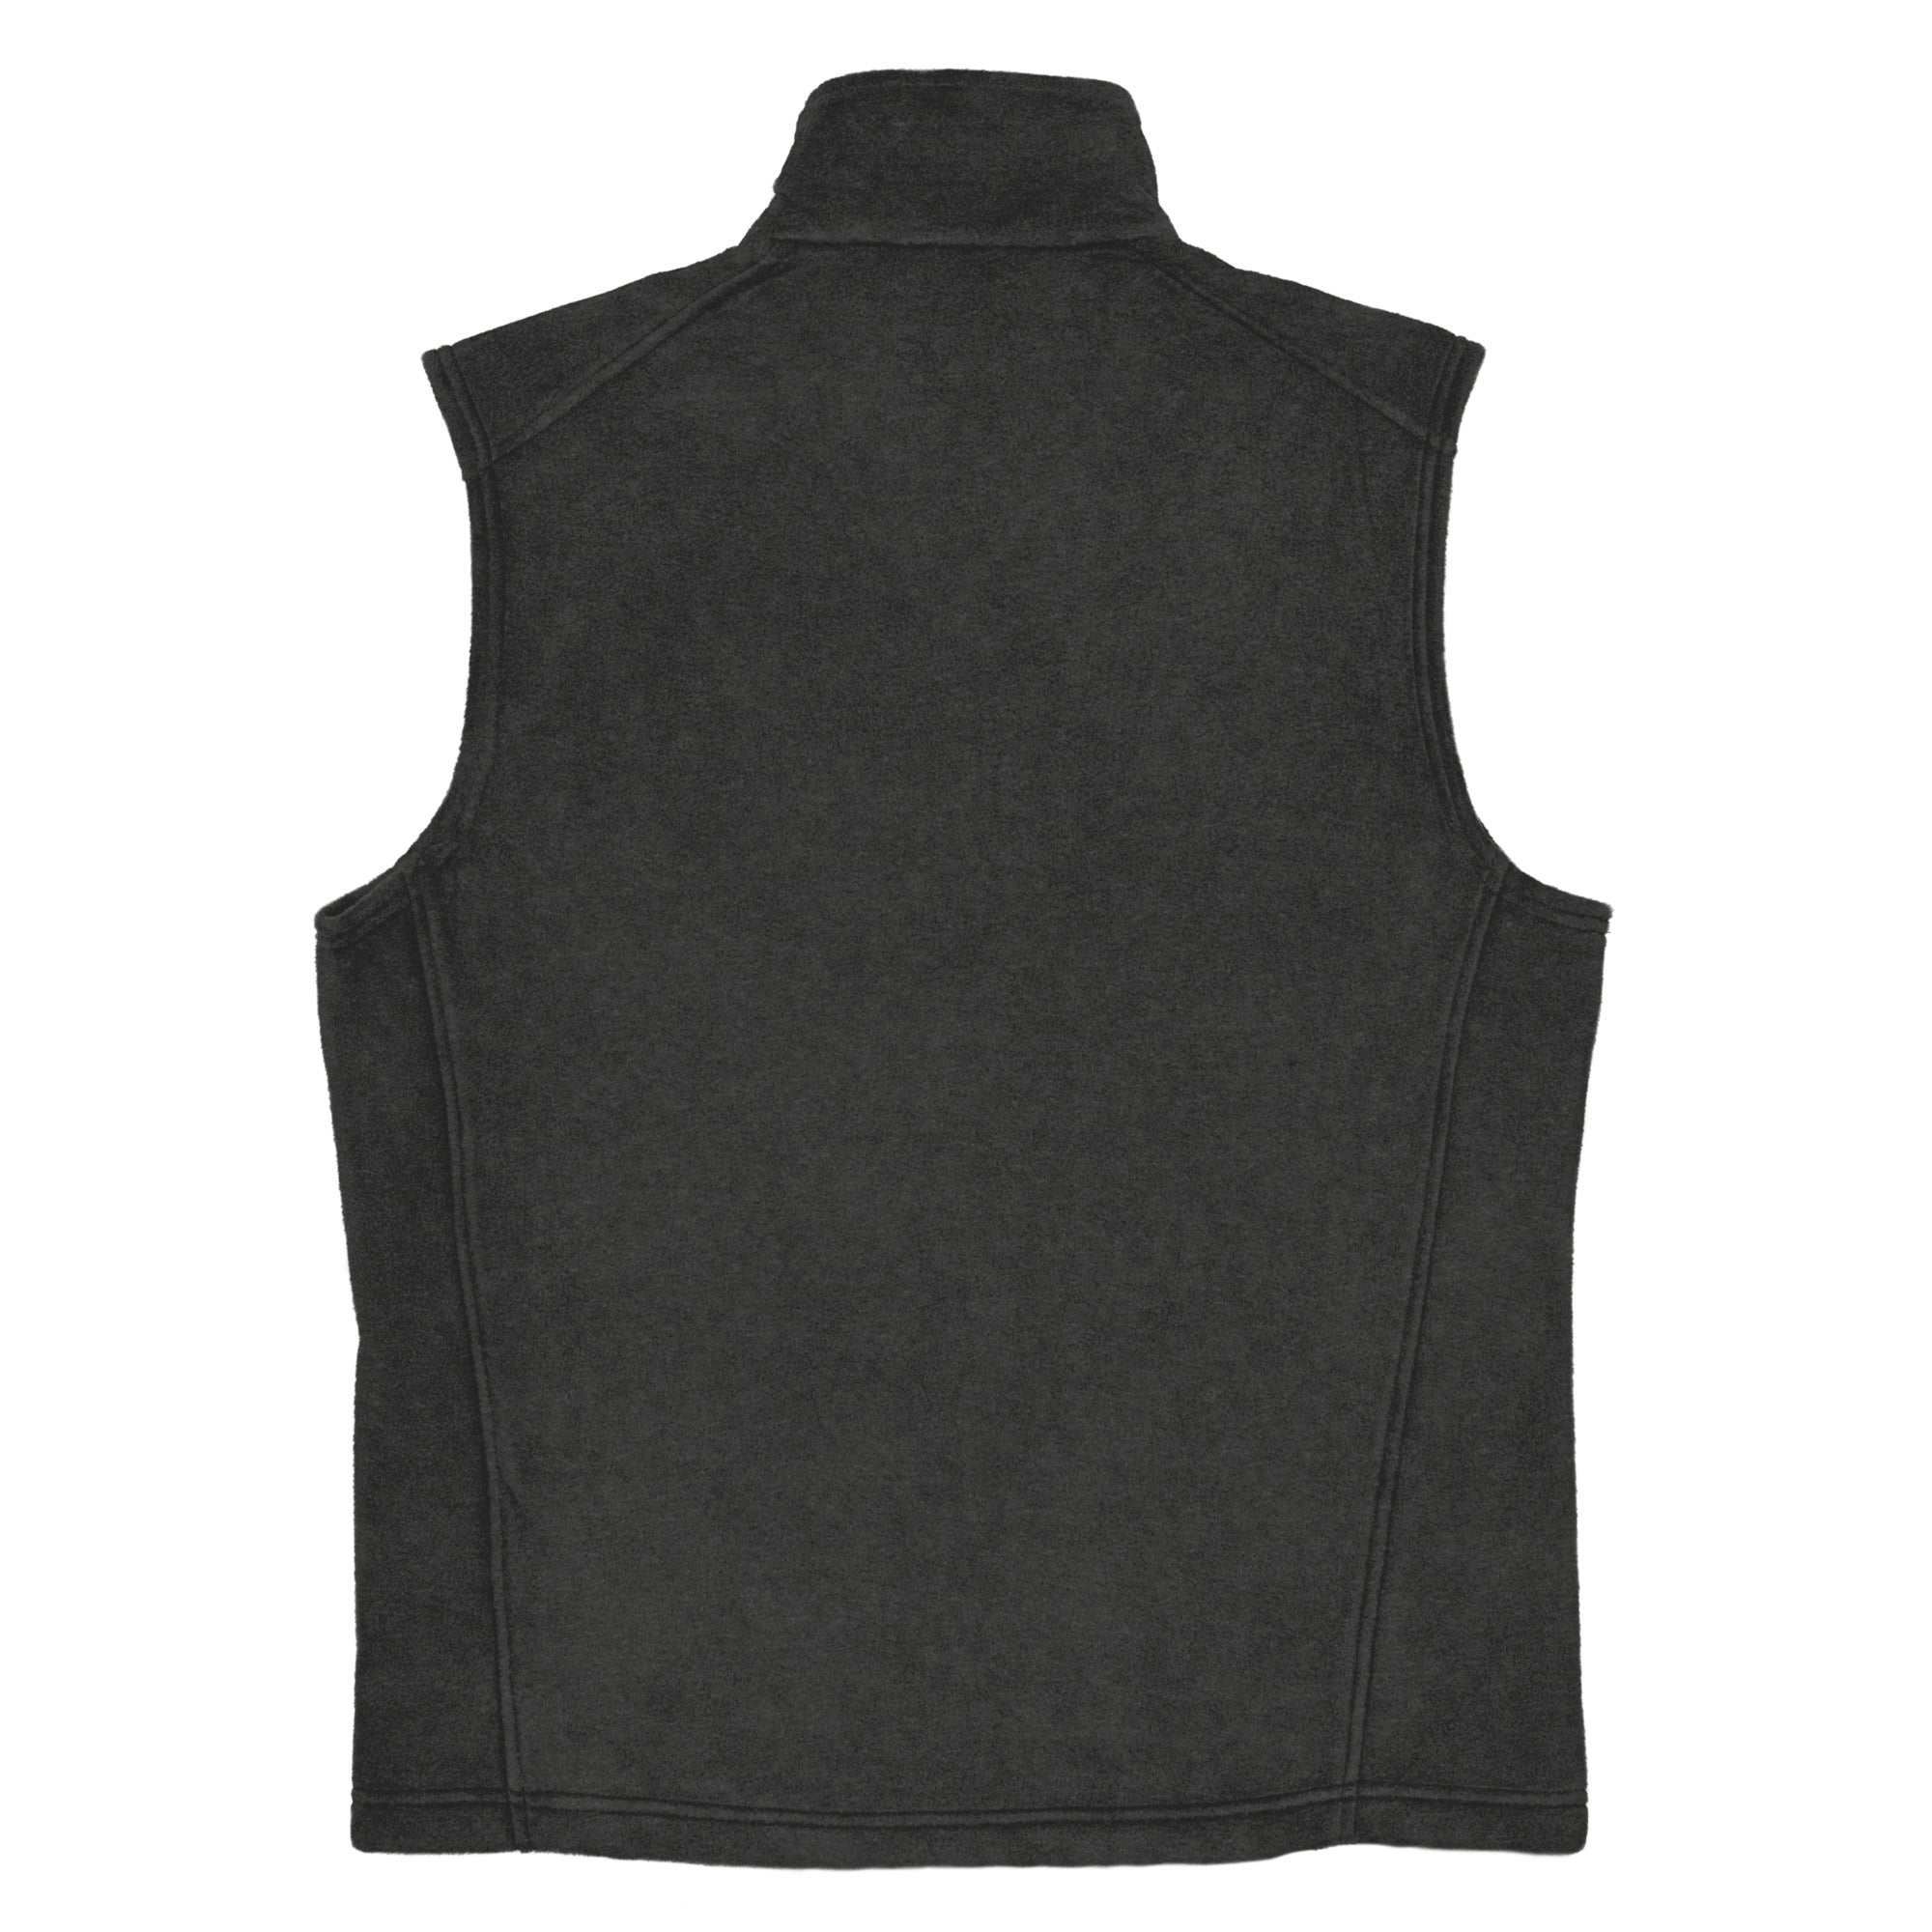 "The Outlier Project" Men’s Columbia fleece vest